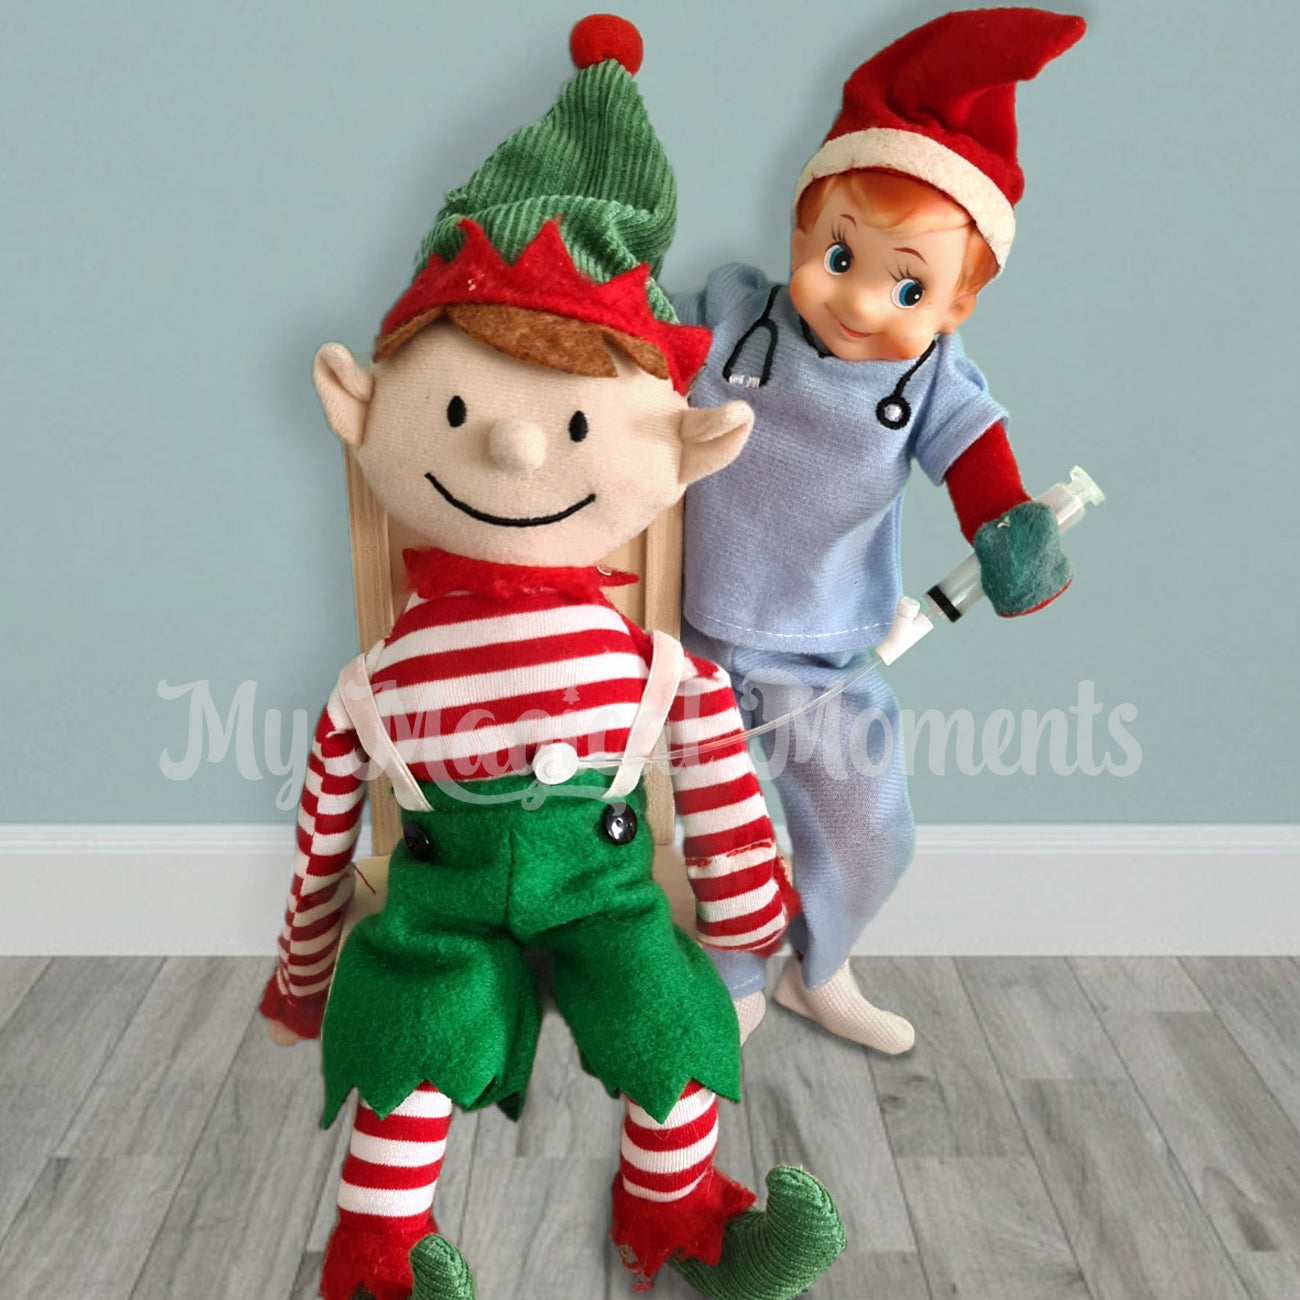 Elf dressed as a nurse, helping an elf for Christmas with a feeding tube